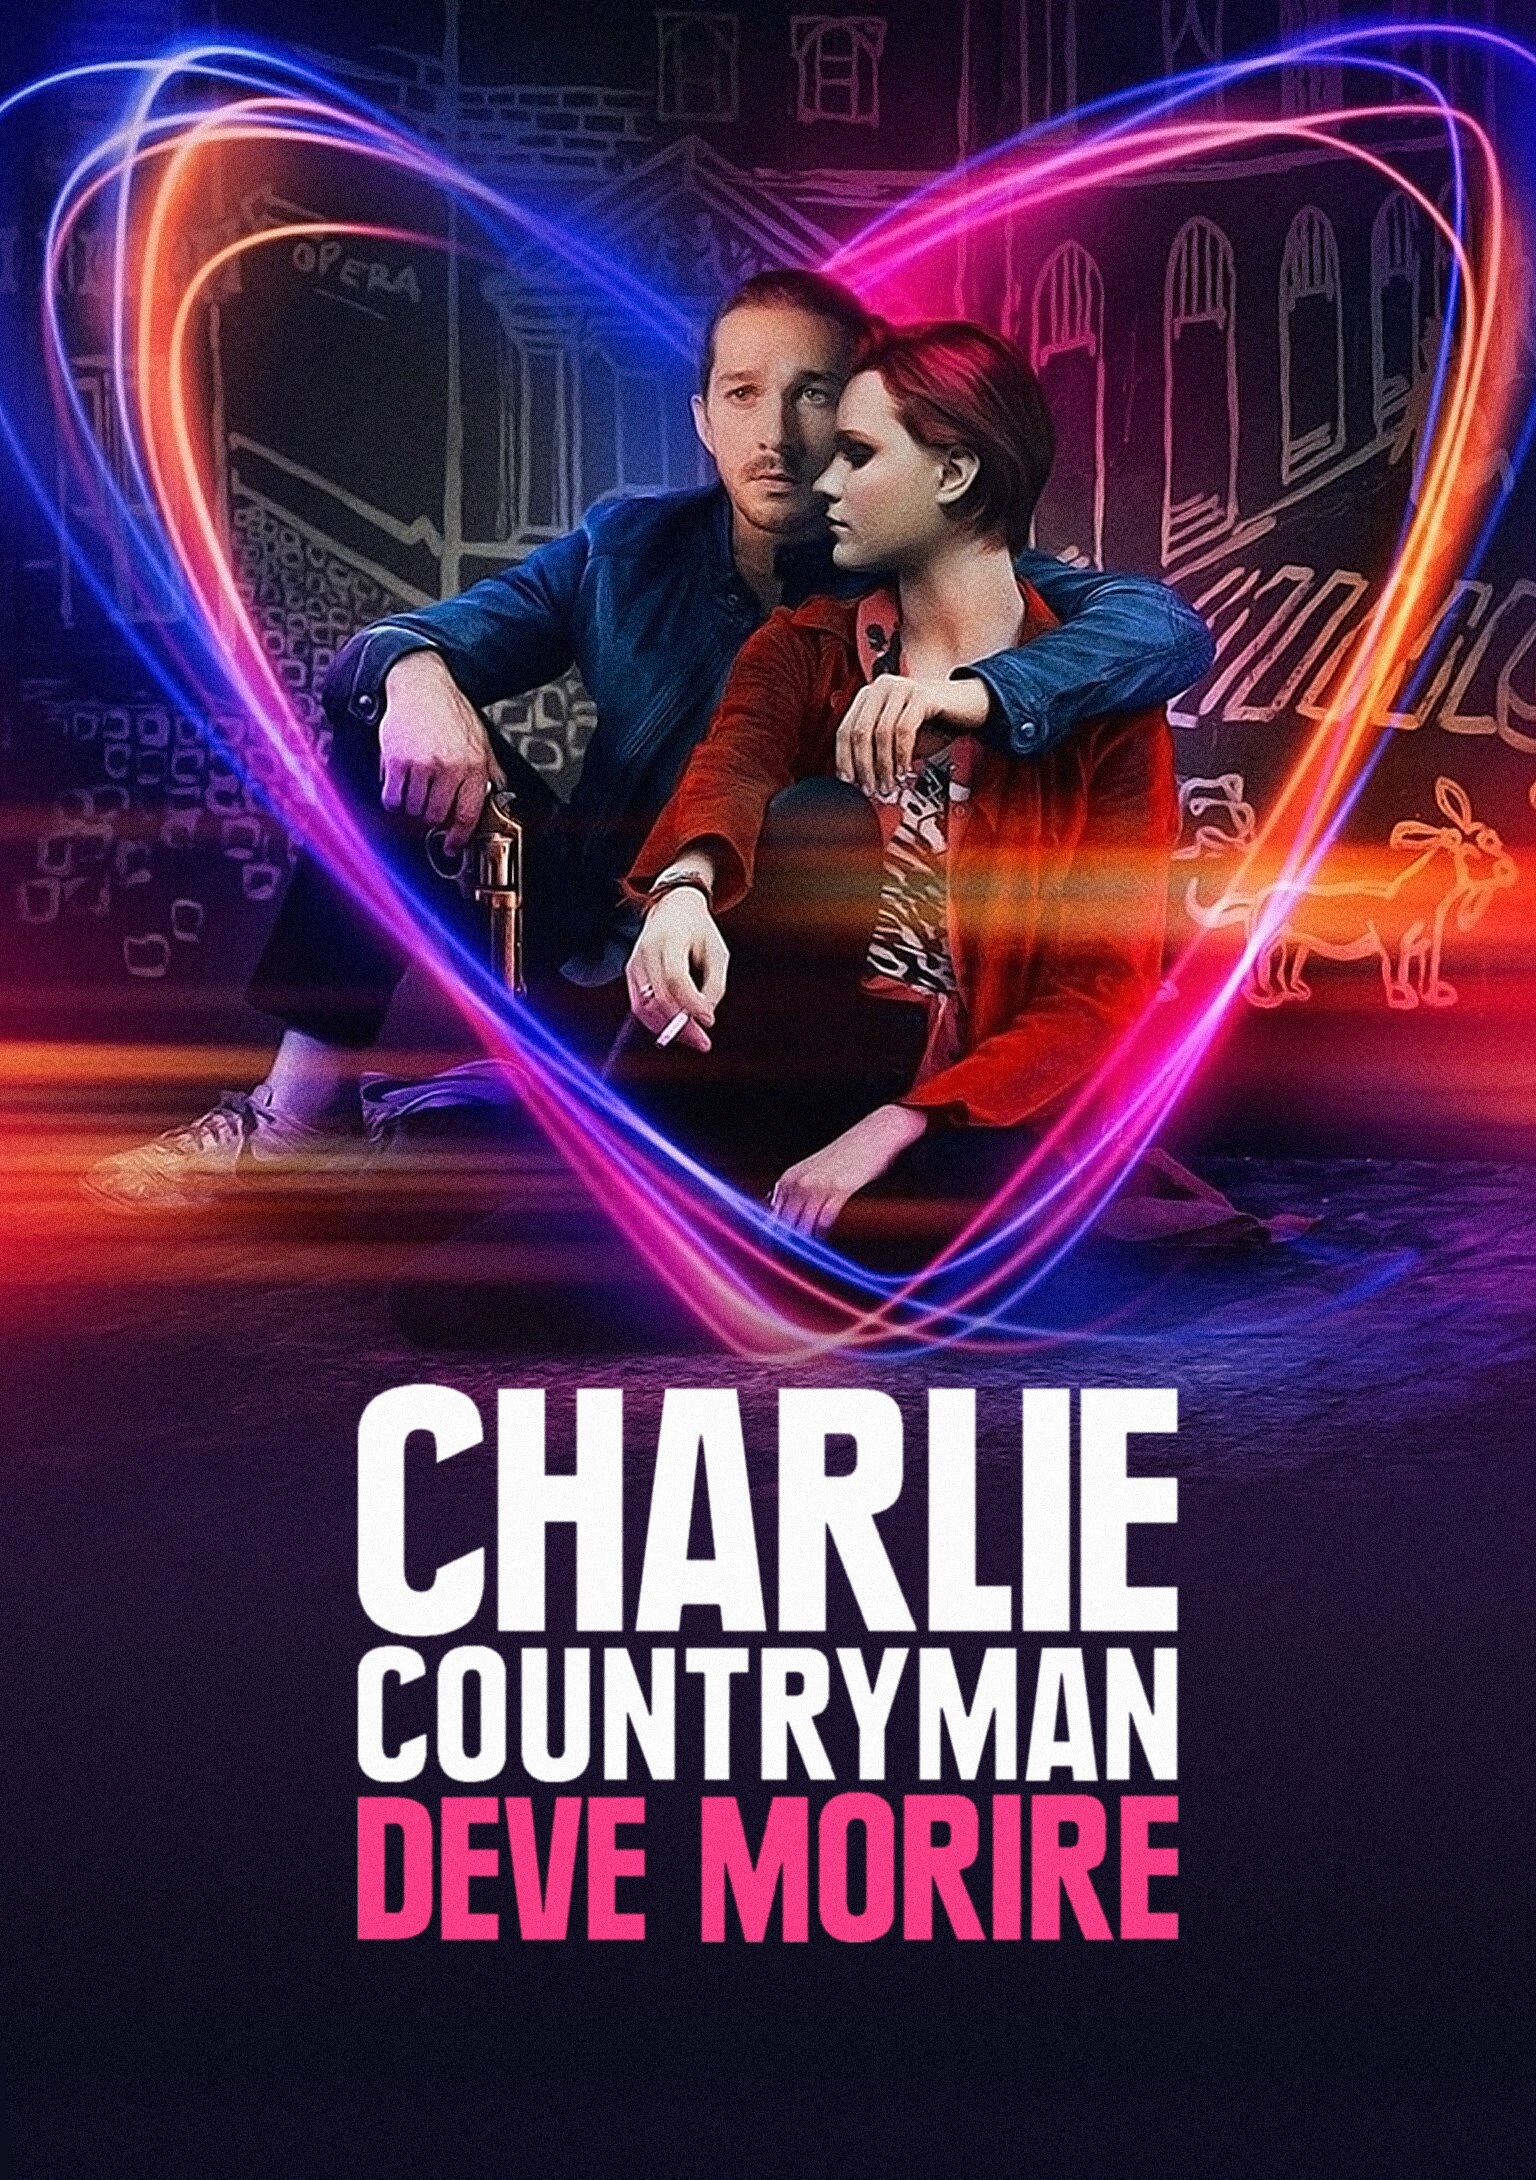 Charlie Countryman deve morire [HD] (2013)